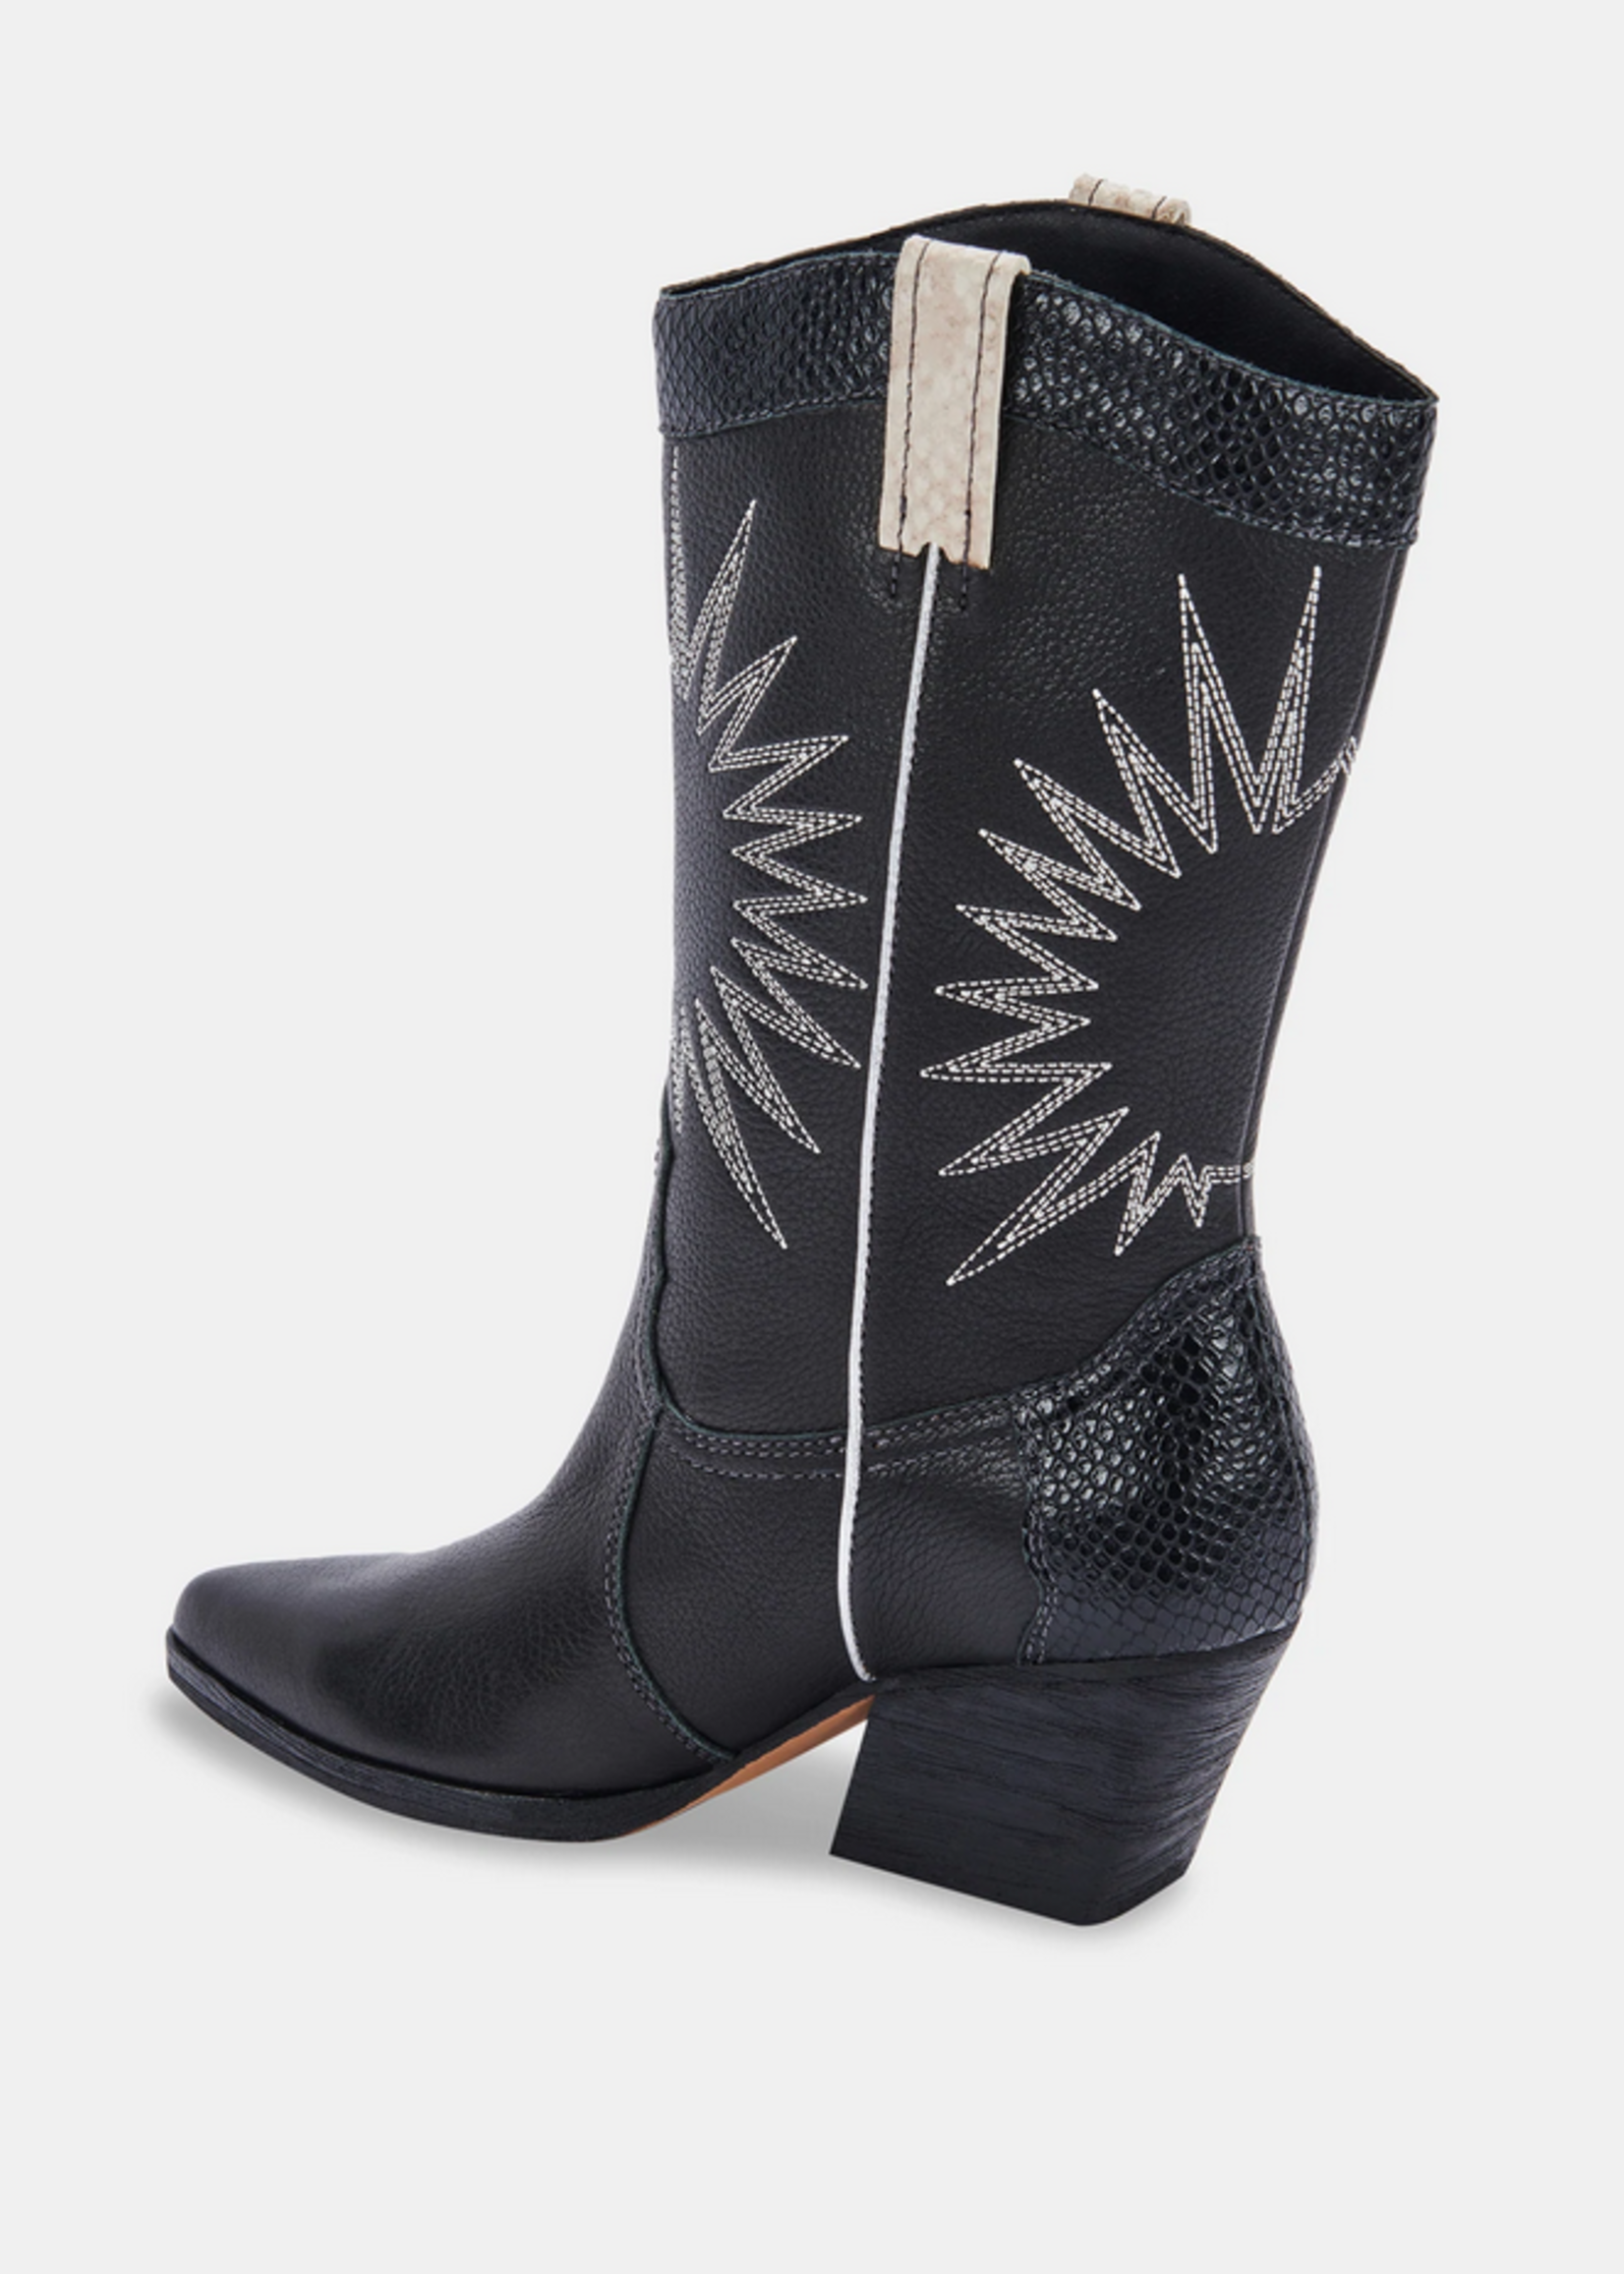 Dolce Vita  Lawson Leather Boot - Black